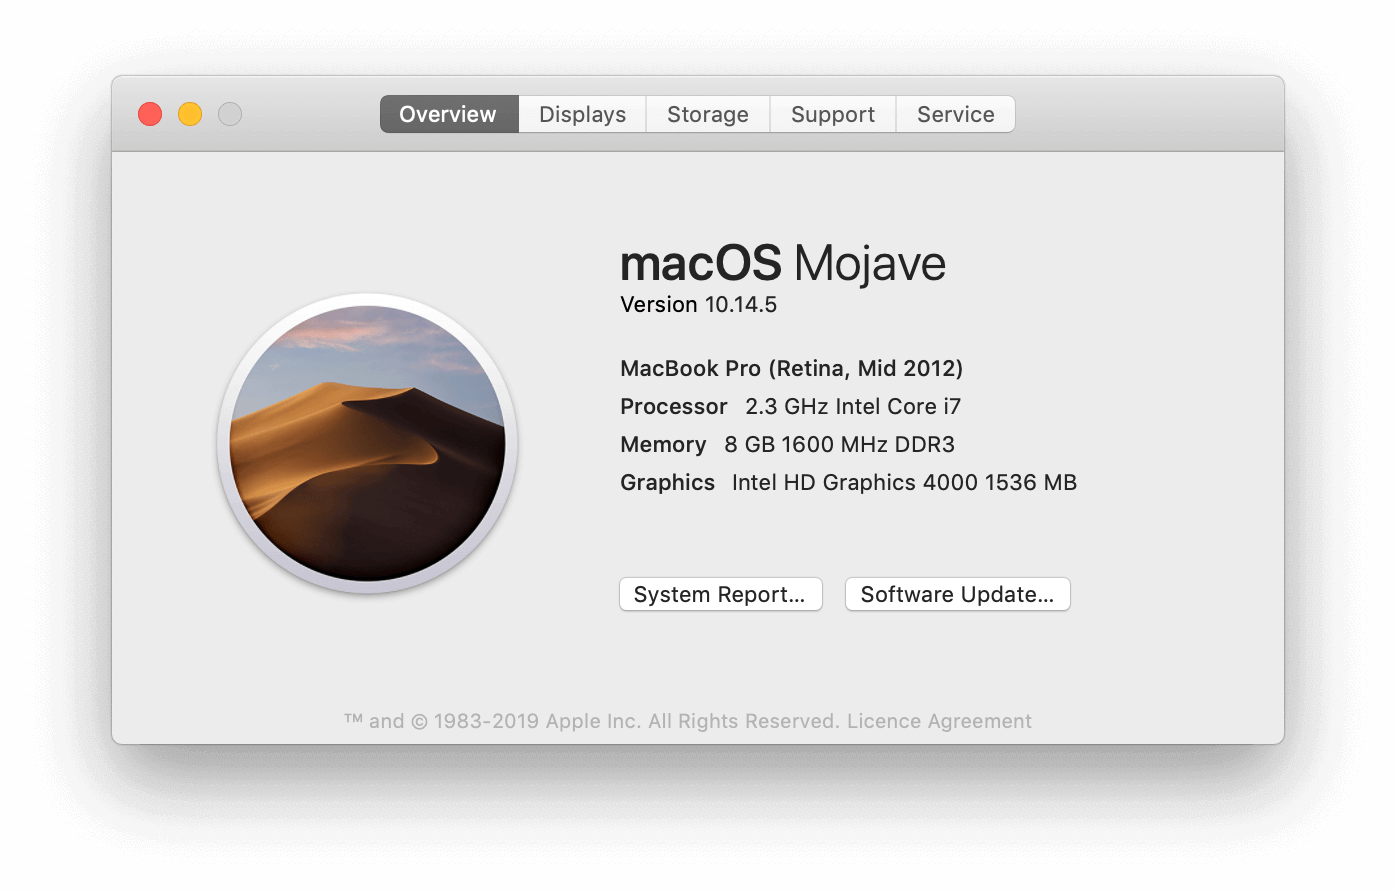 Macbook Pro Retina 2012. Operating system: macOS 10.14.5. Processor: 2.3 GHz Intel Core i7. Memory: 8 GB 1600 MHz DDR3.